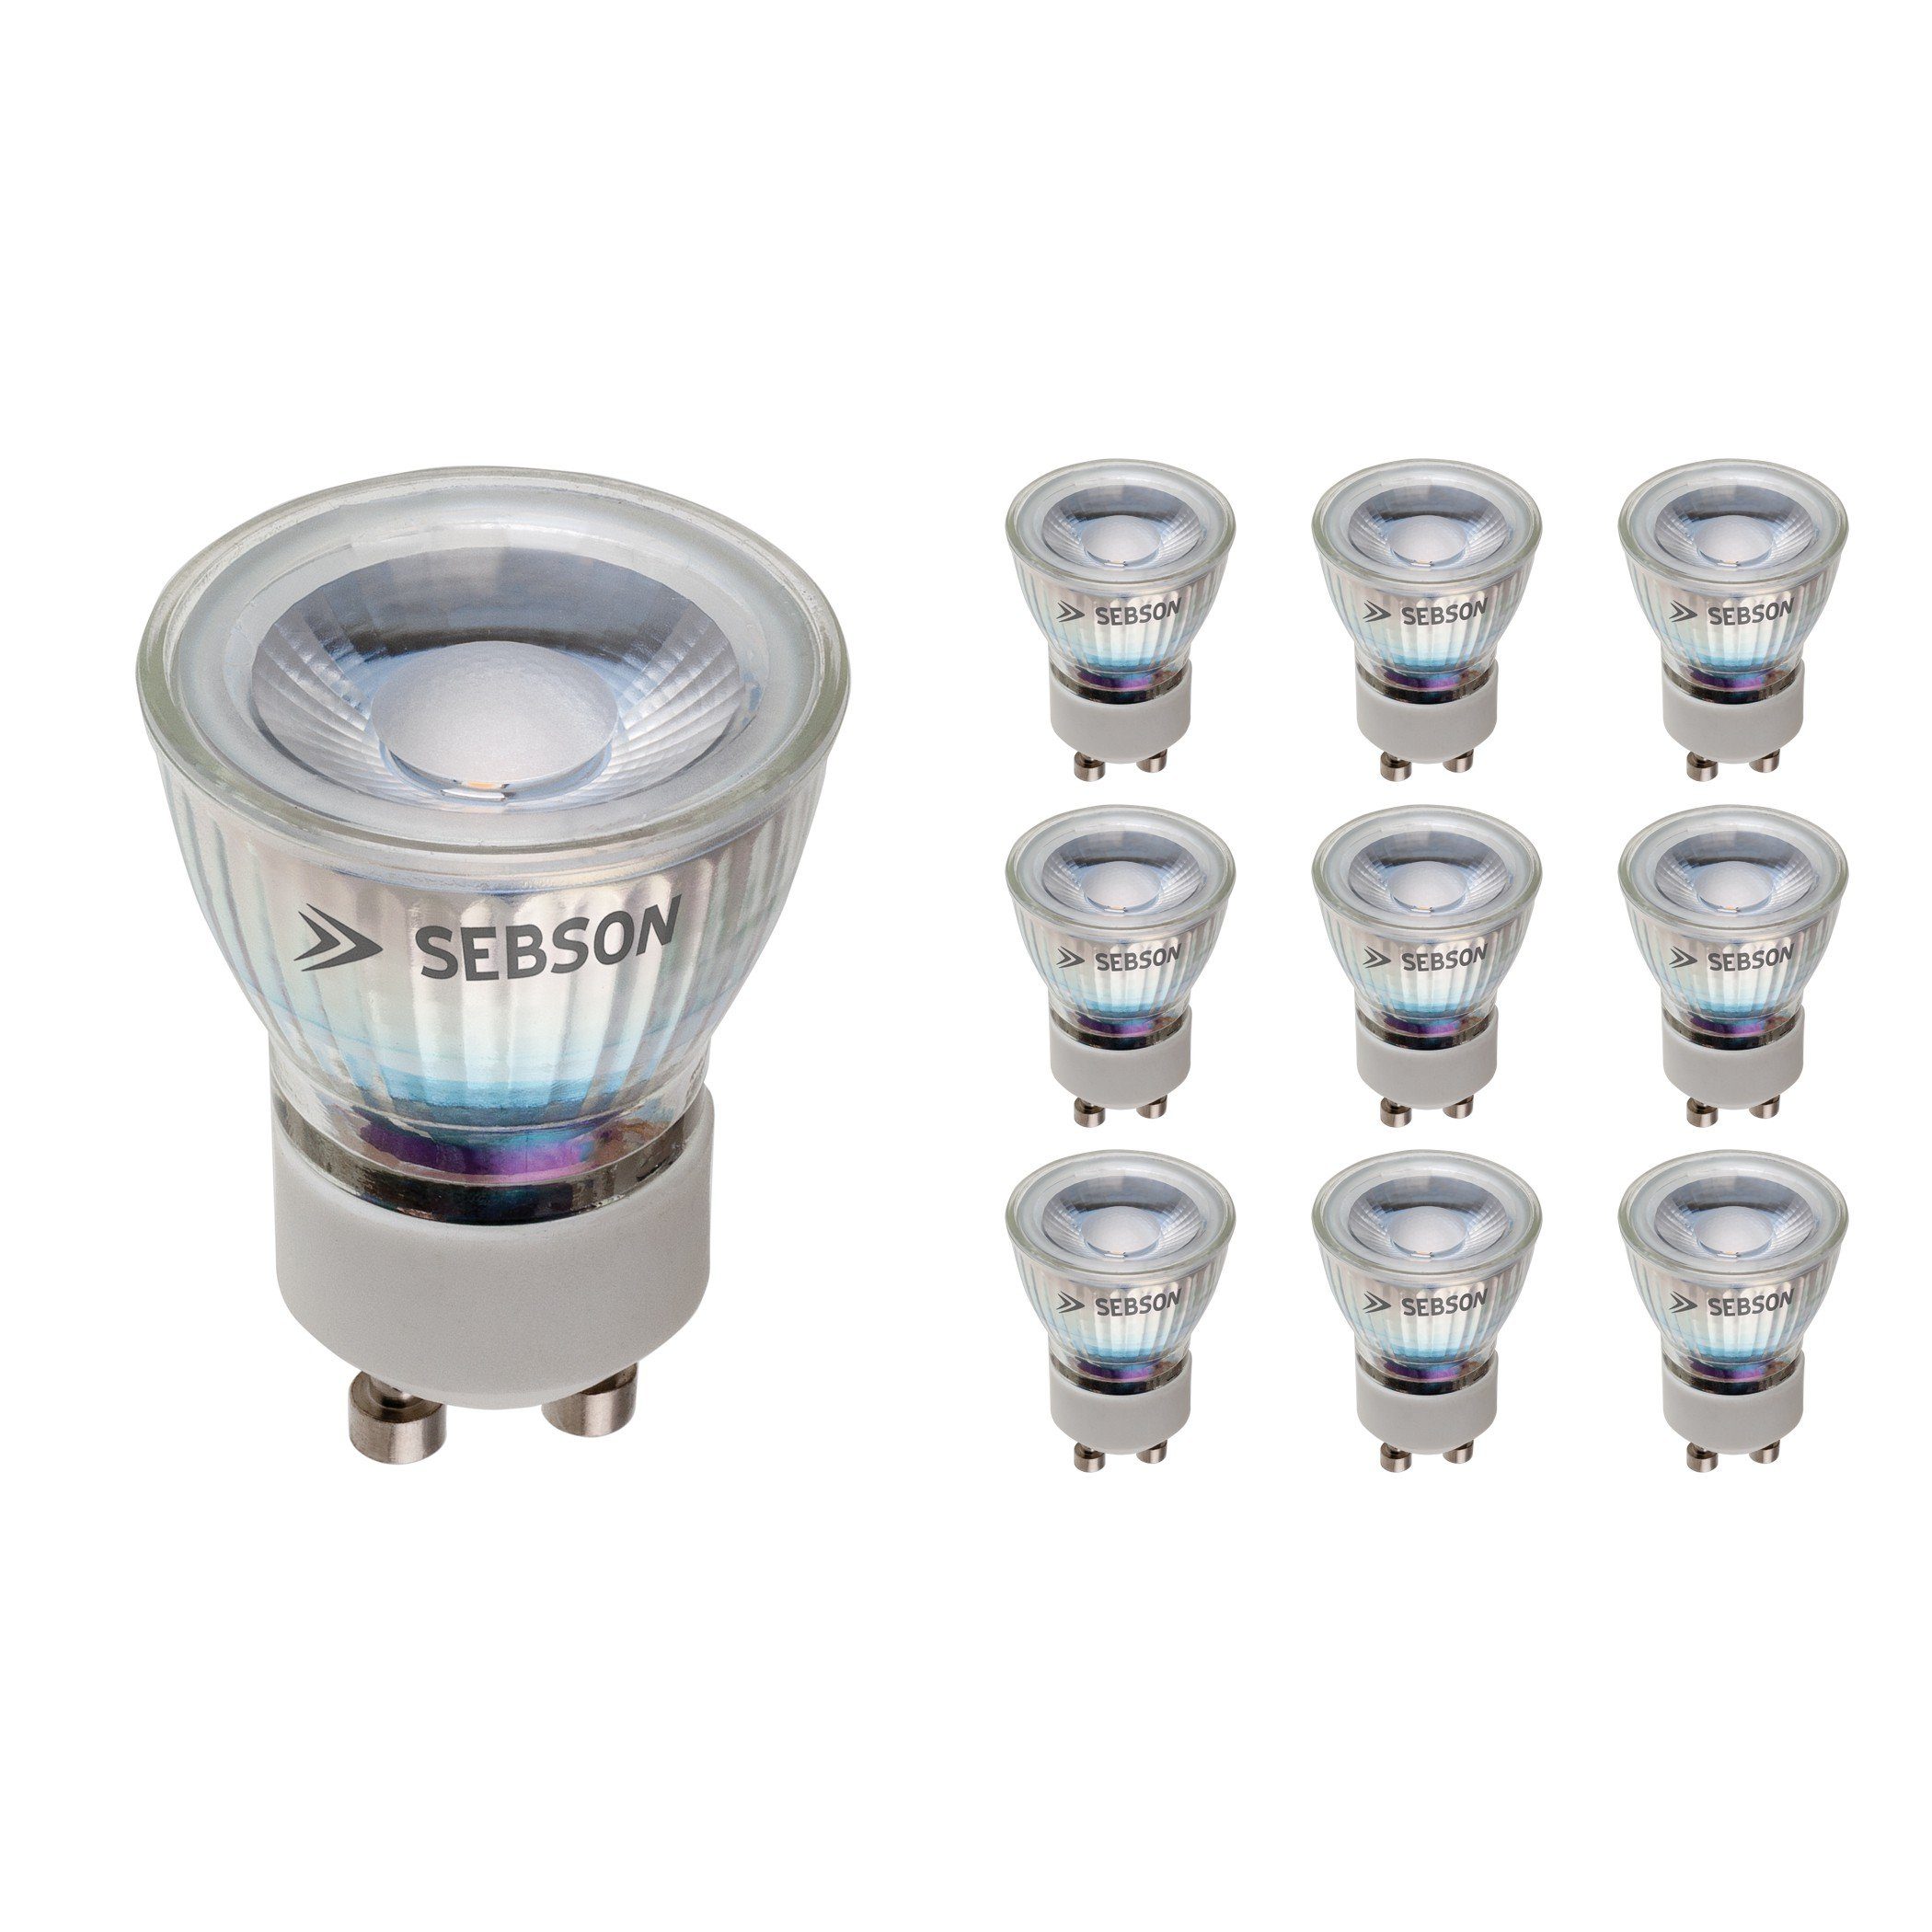 SEBSON LED-Leuchtmittel LED Lampe GU10 warmweiß 3W 35mm 250lm Spot 46° 230V - 10er Pack, GU10, 10 St., Warmweiß, Einbaustrahler 230V